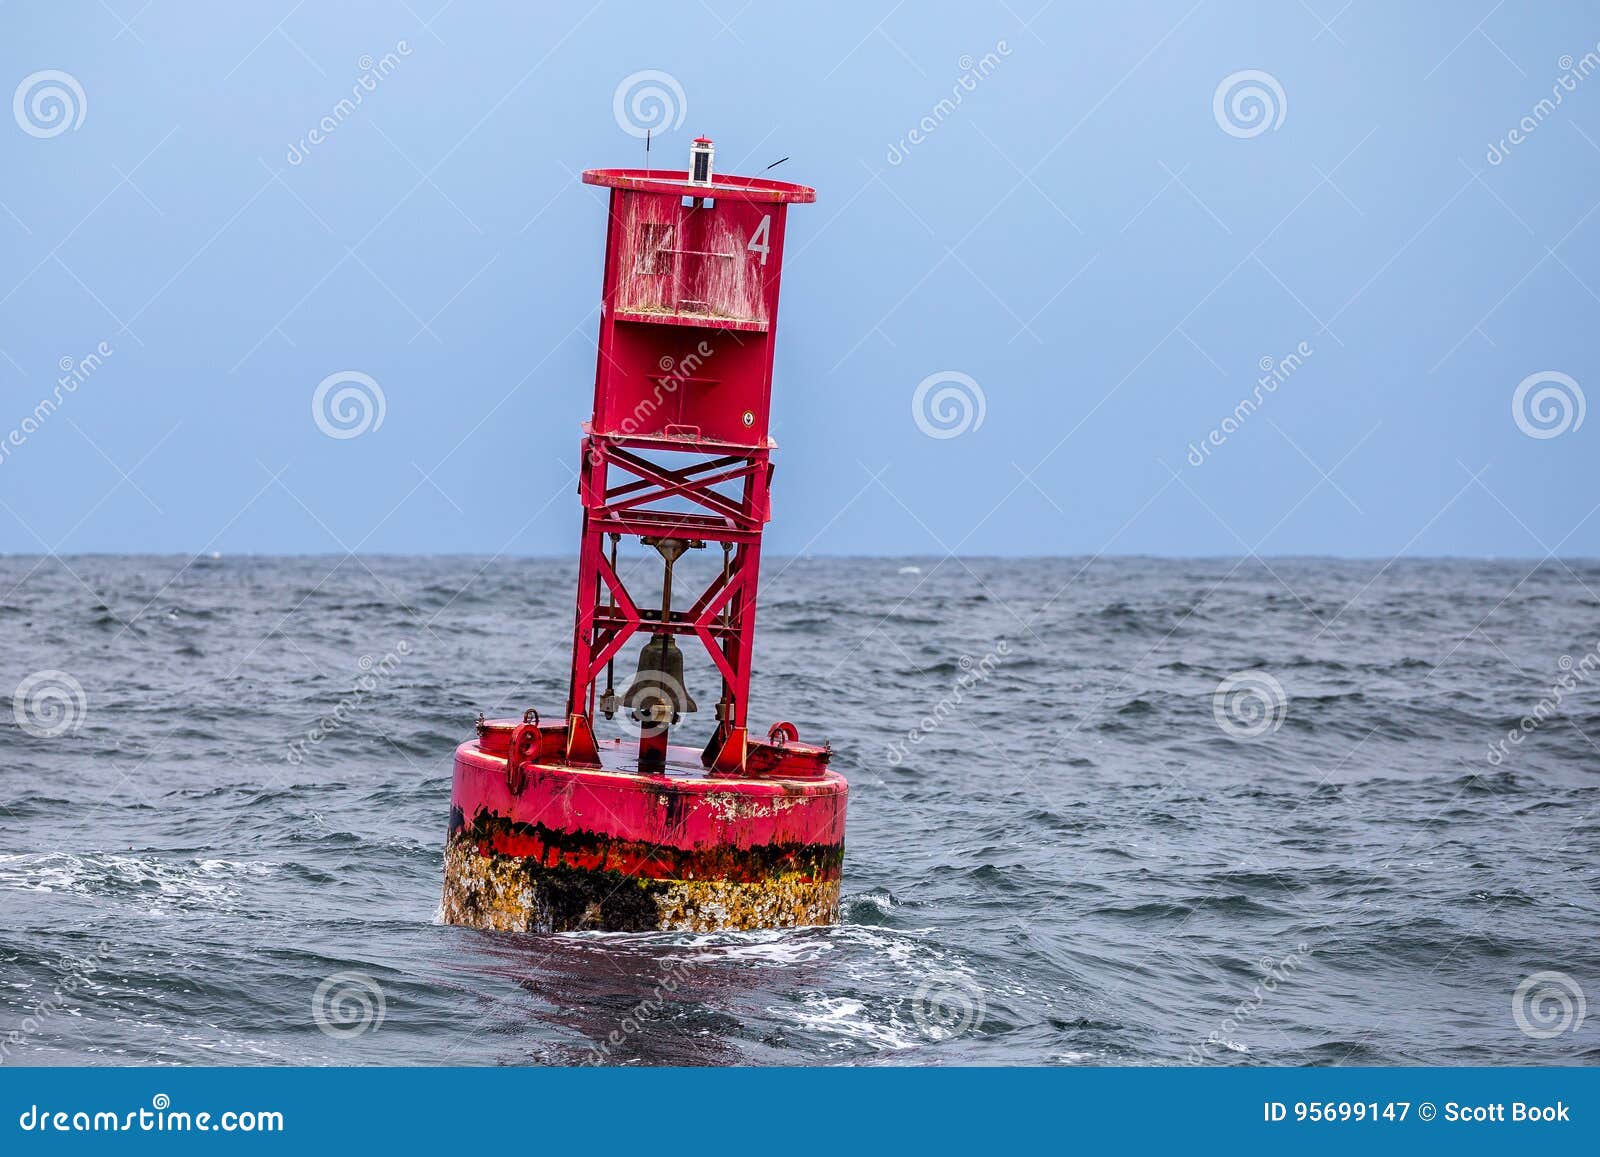 red ocean buoy